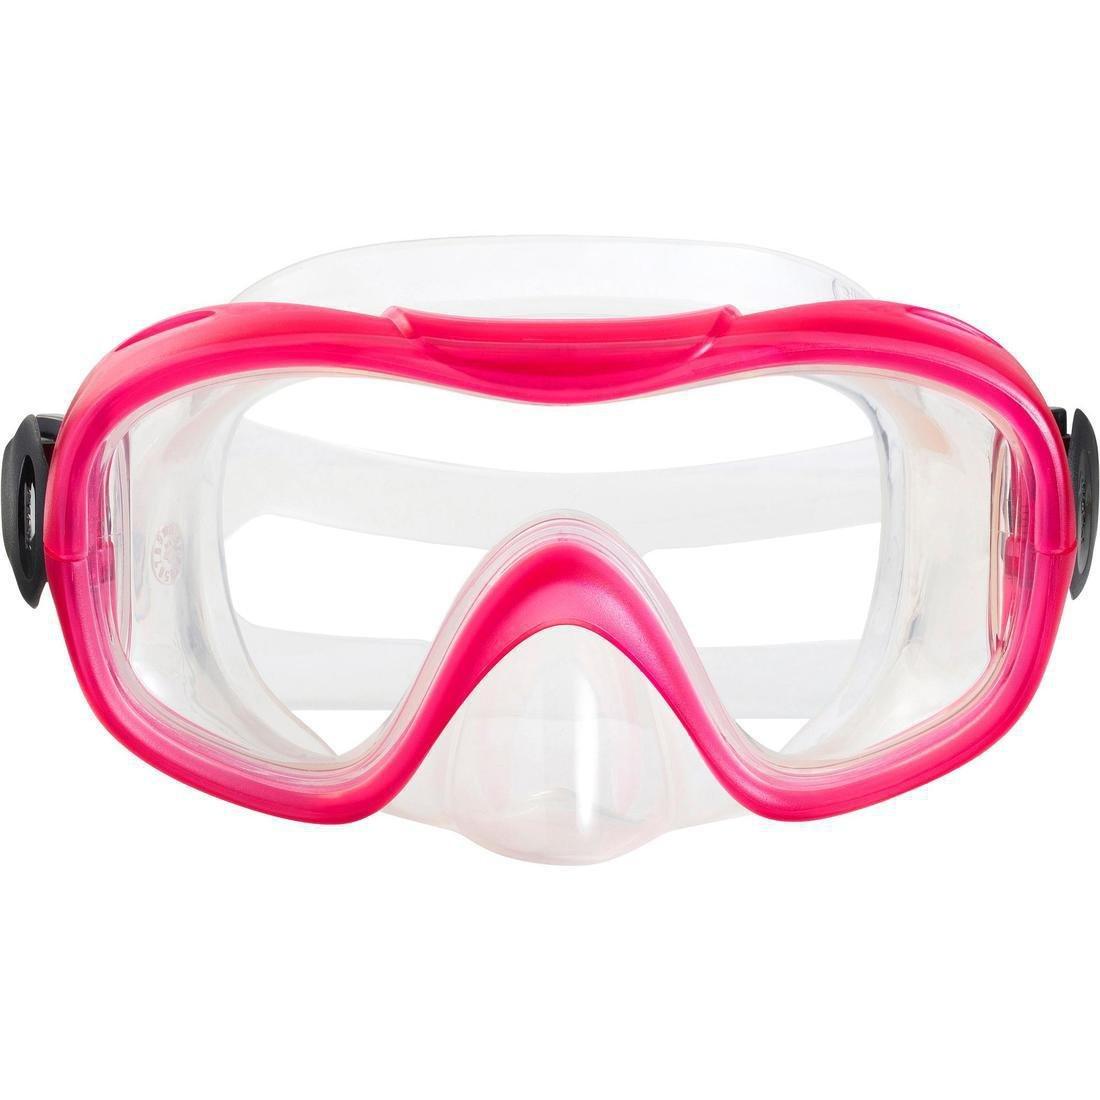 SUBEA - Kids Snorkelling Mask Snorkel Fins Set Snk 500, Green